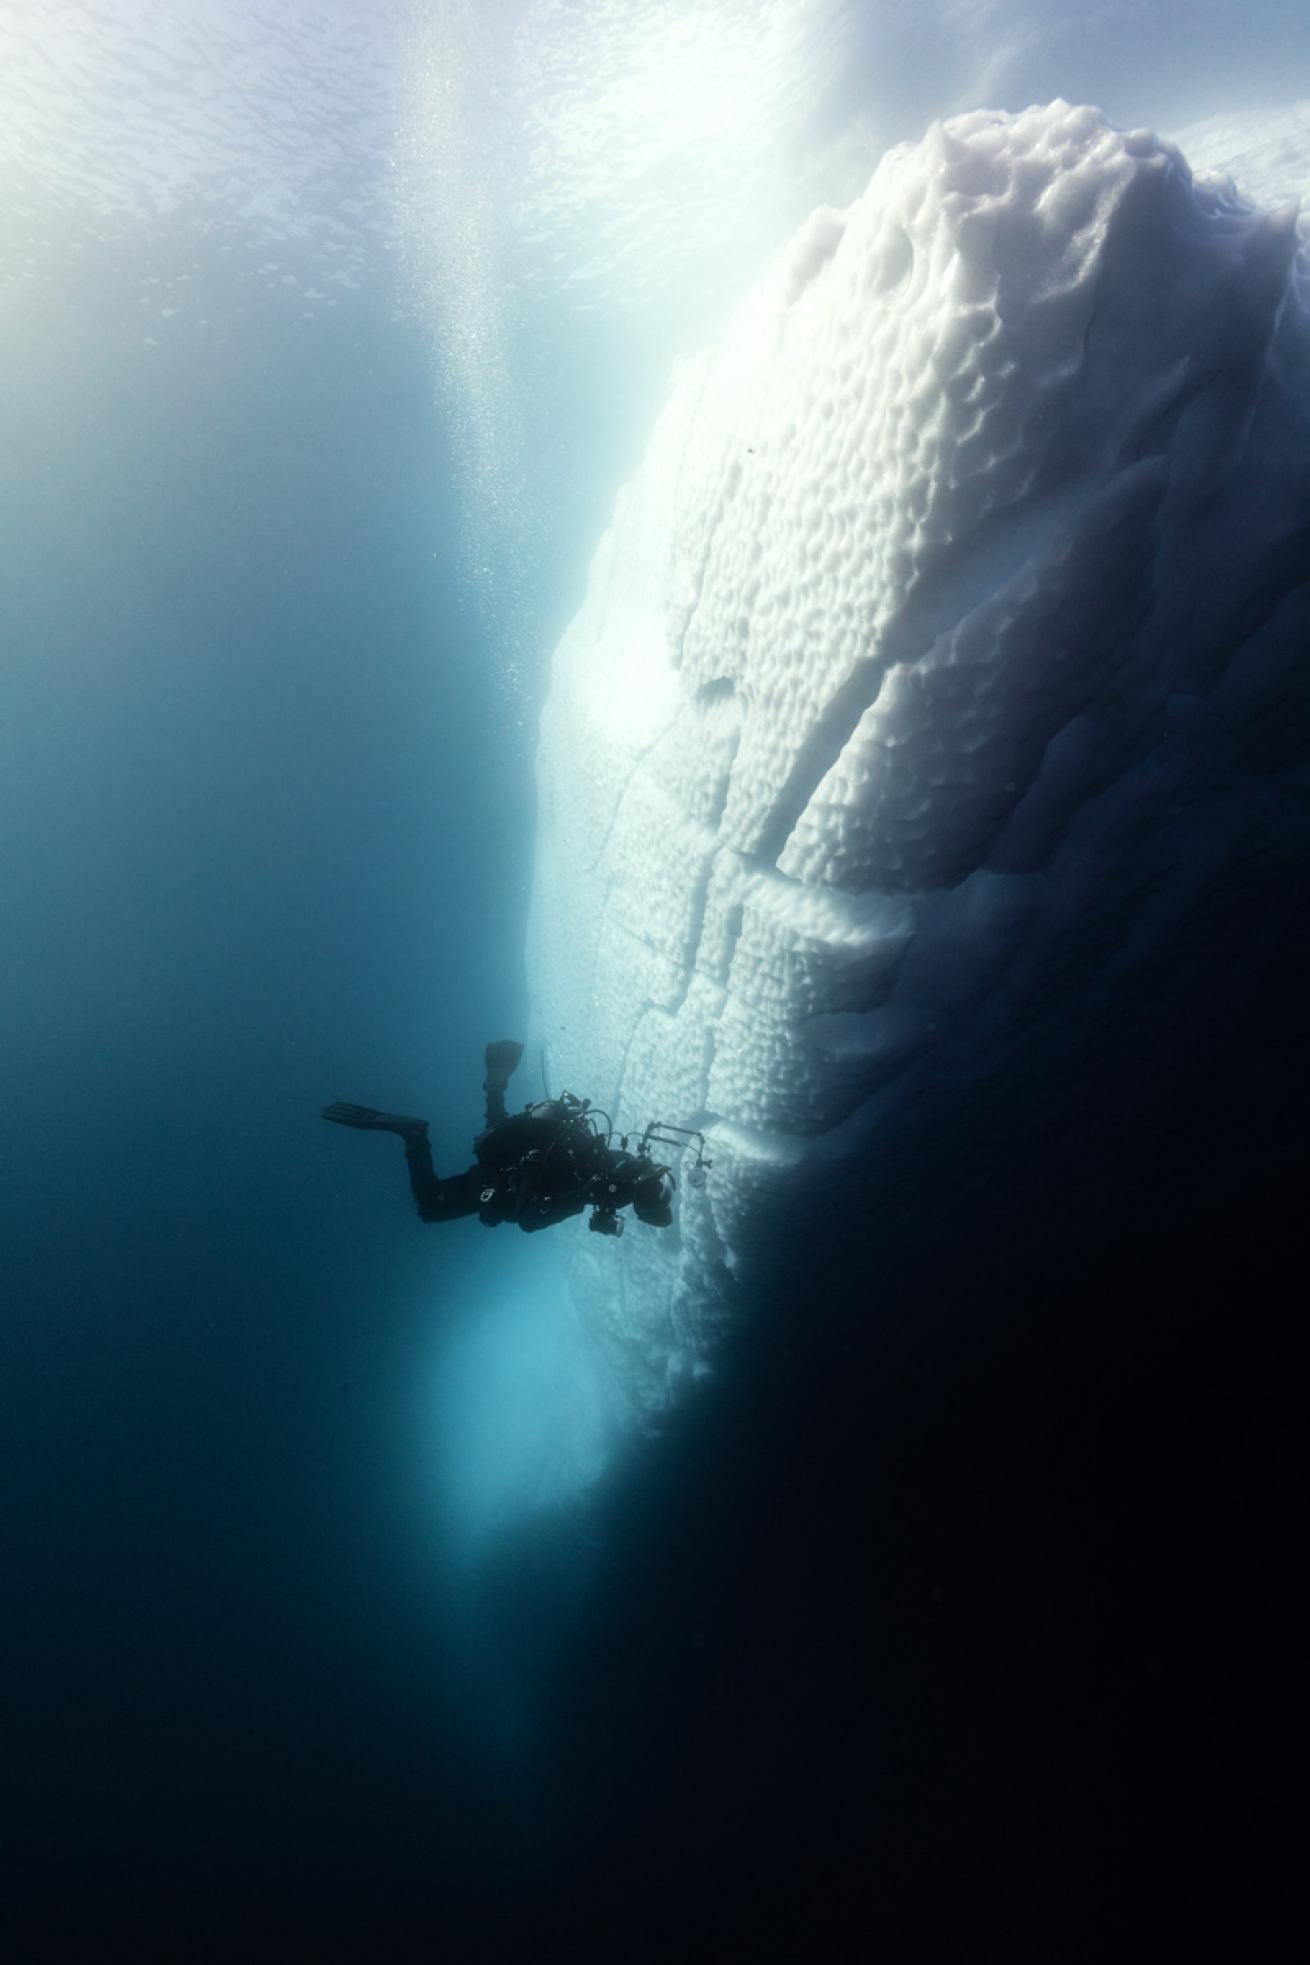 Photographer Ian Segebarth films a ctenophore at the edge of an iceberg at Portal Point, Antarctica.